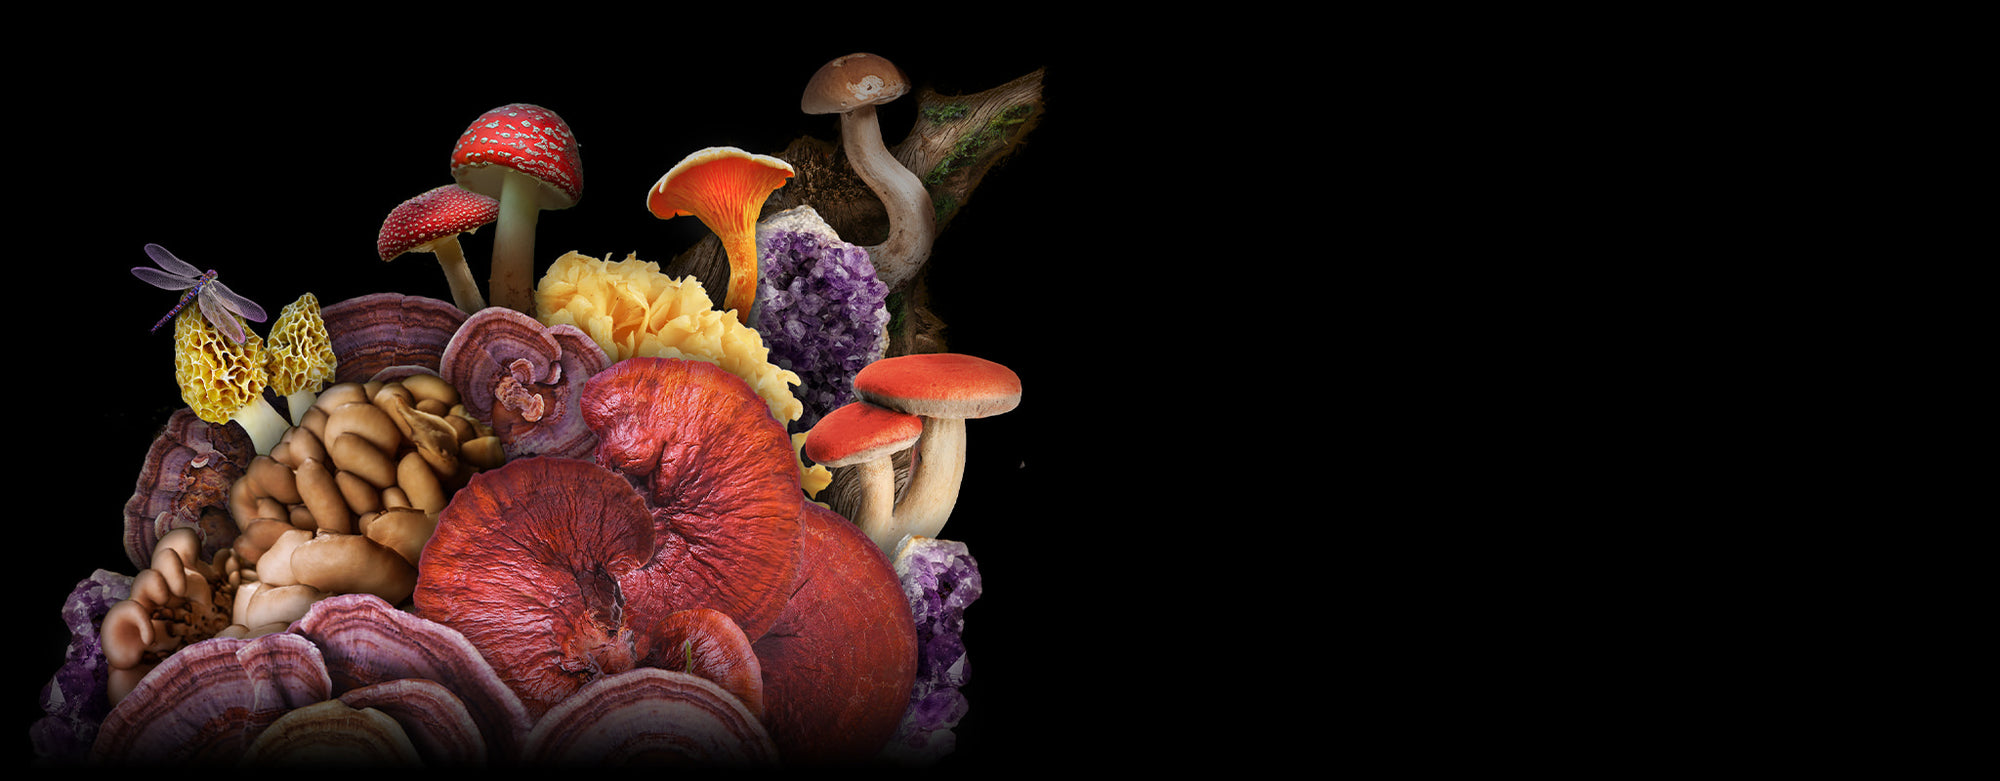 Compilation of mushrooms on black background